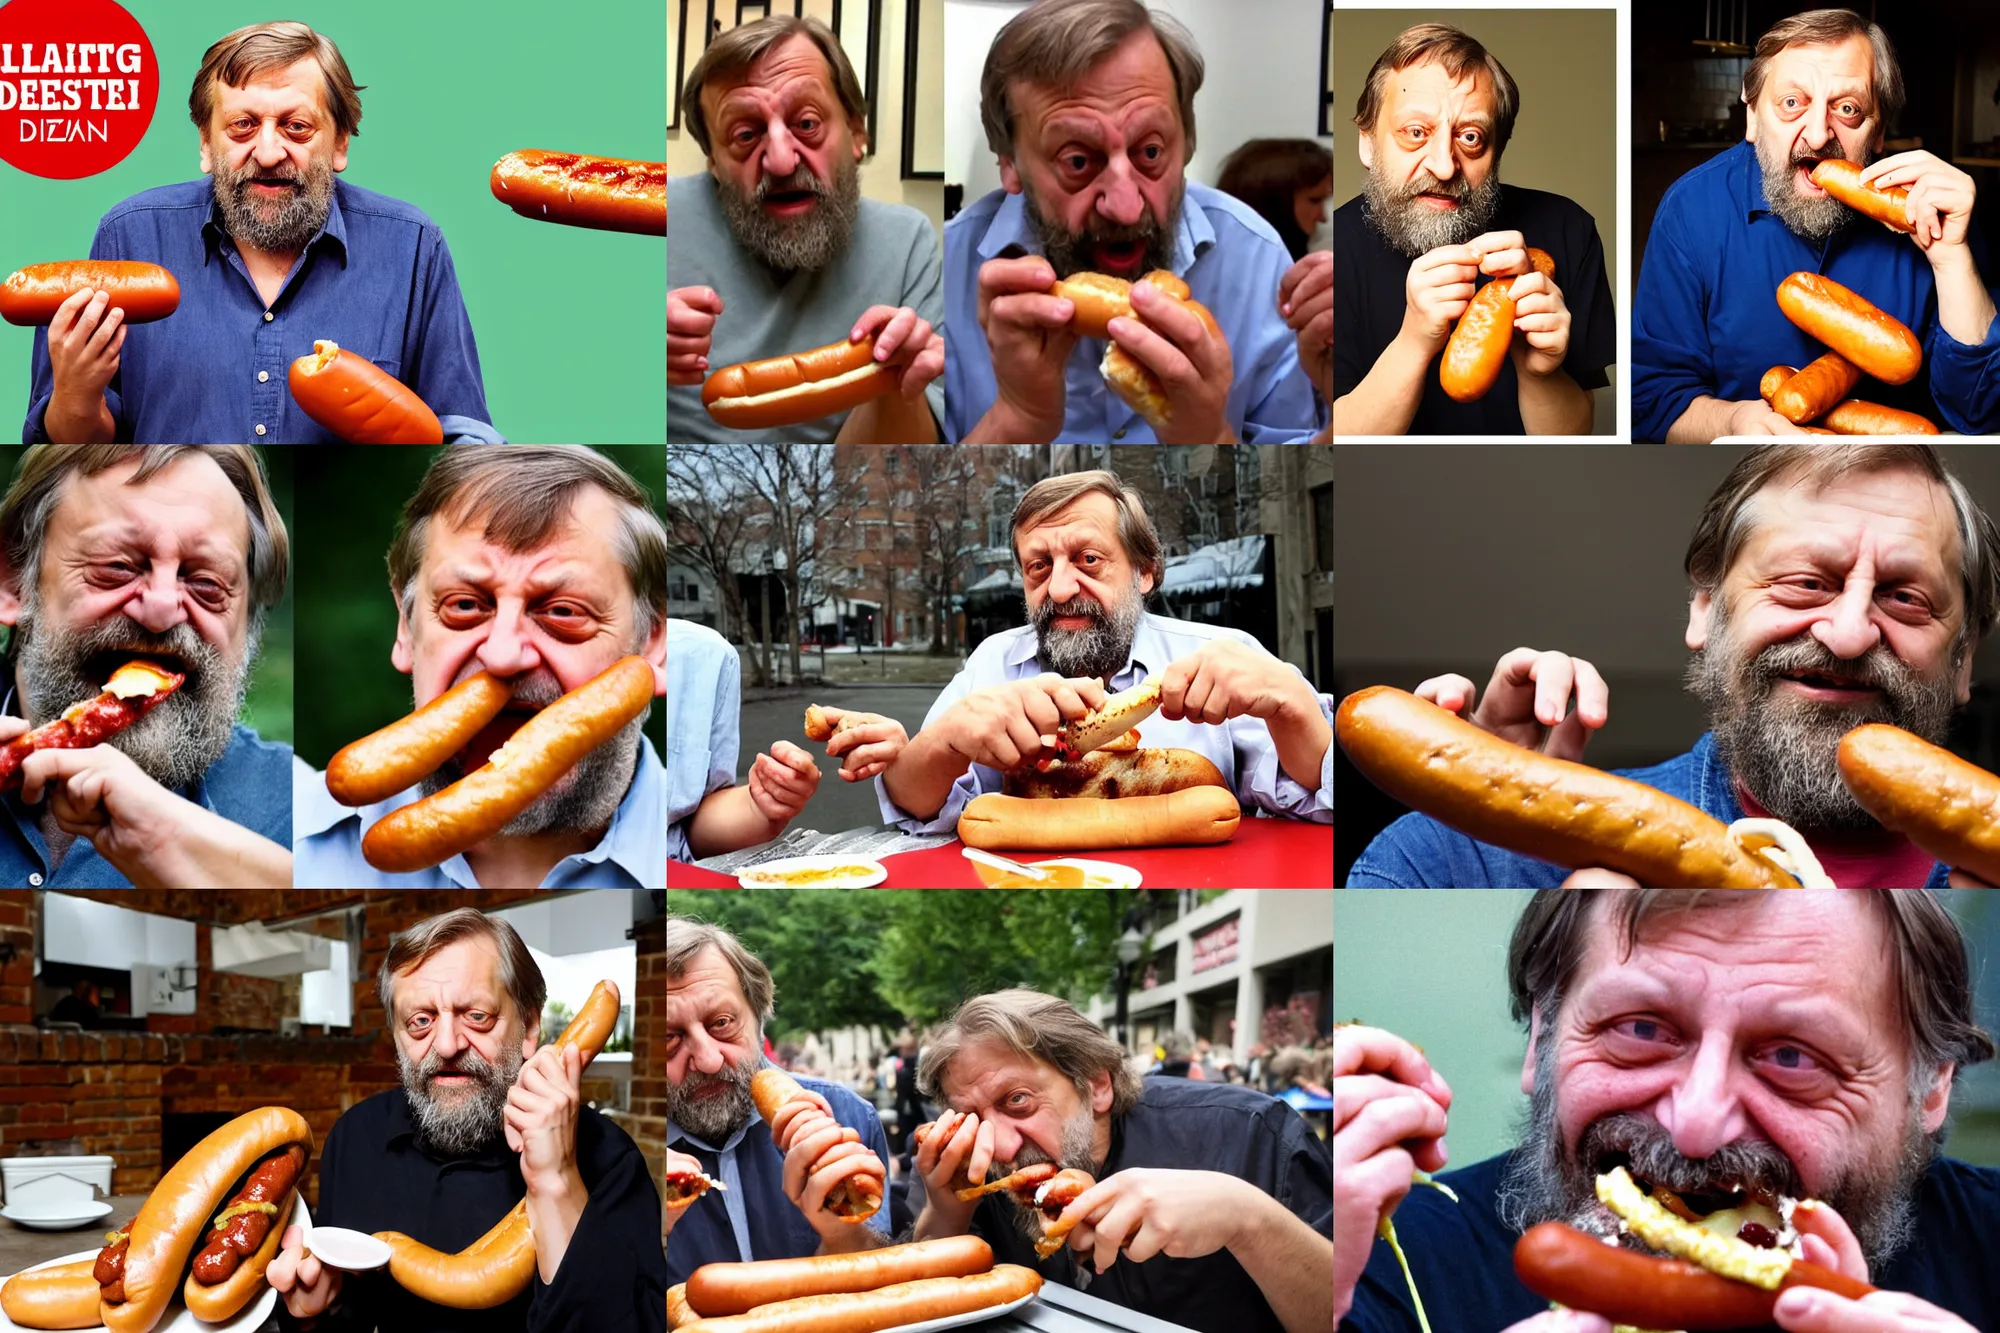 Prompt: Slavoj Žižek demolishing two hotdogs at once